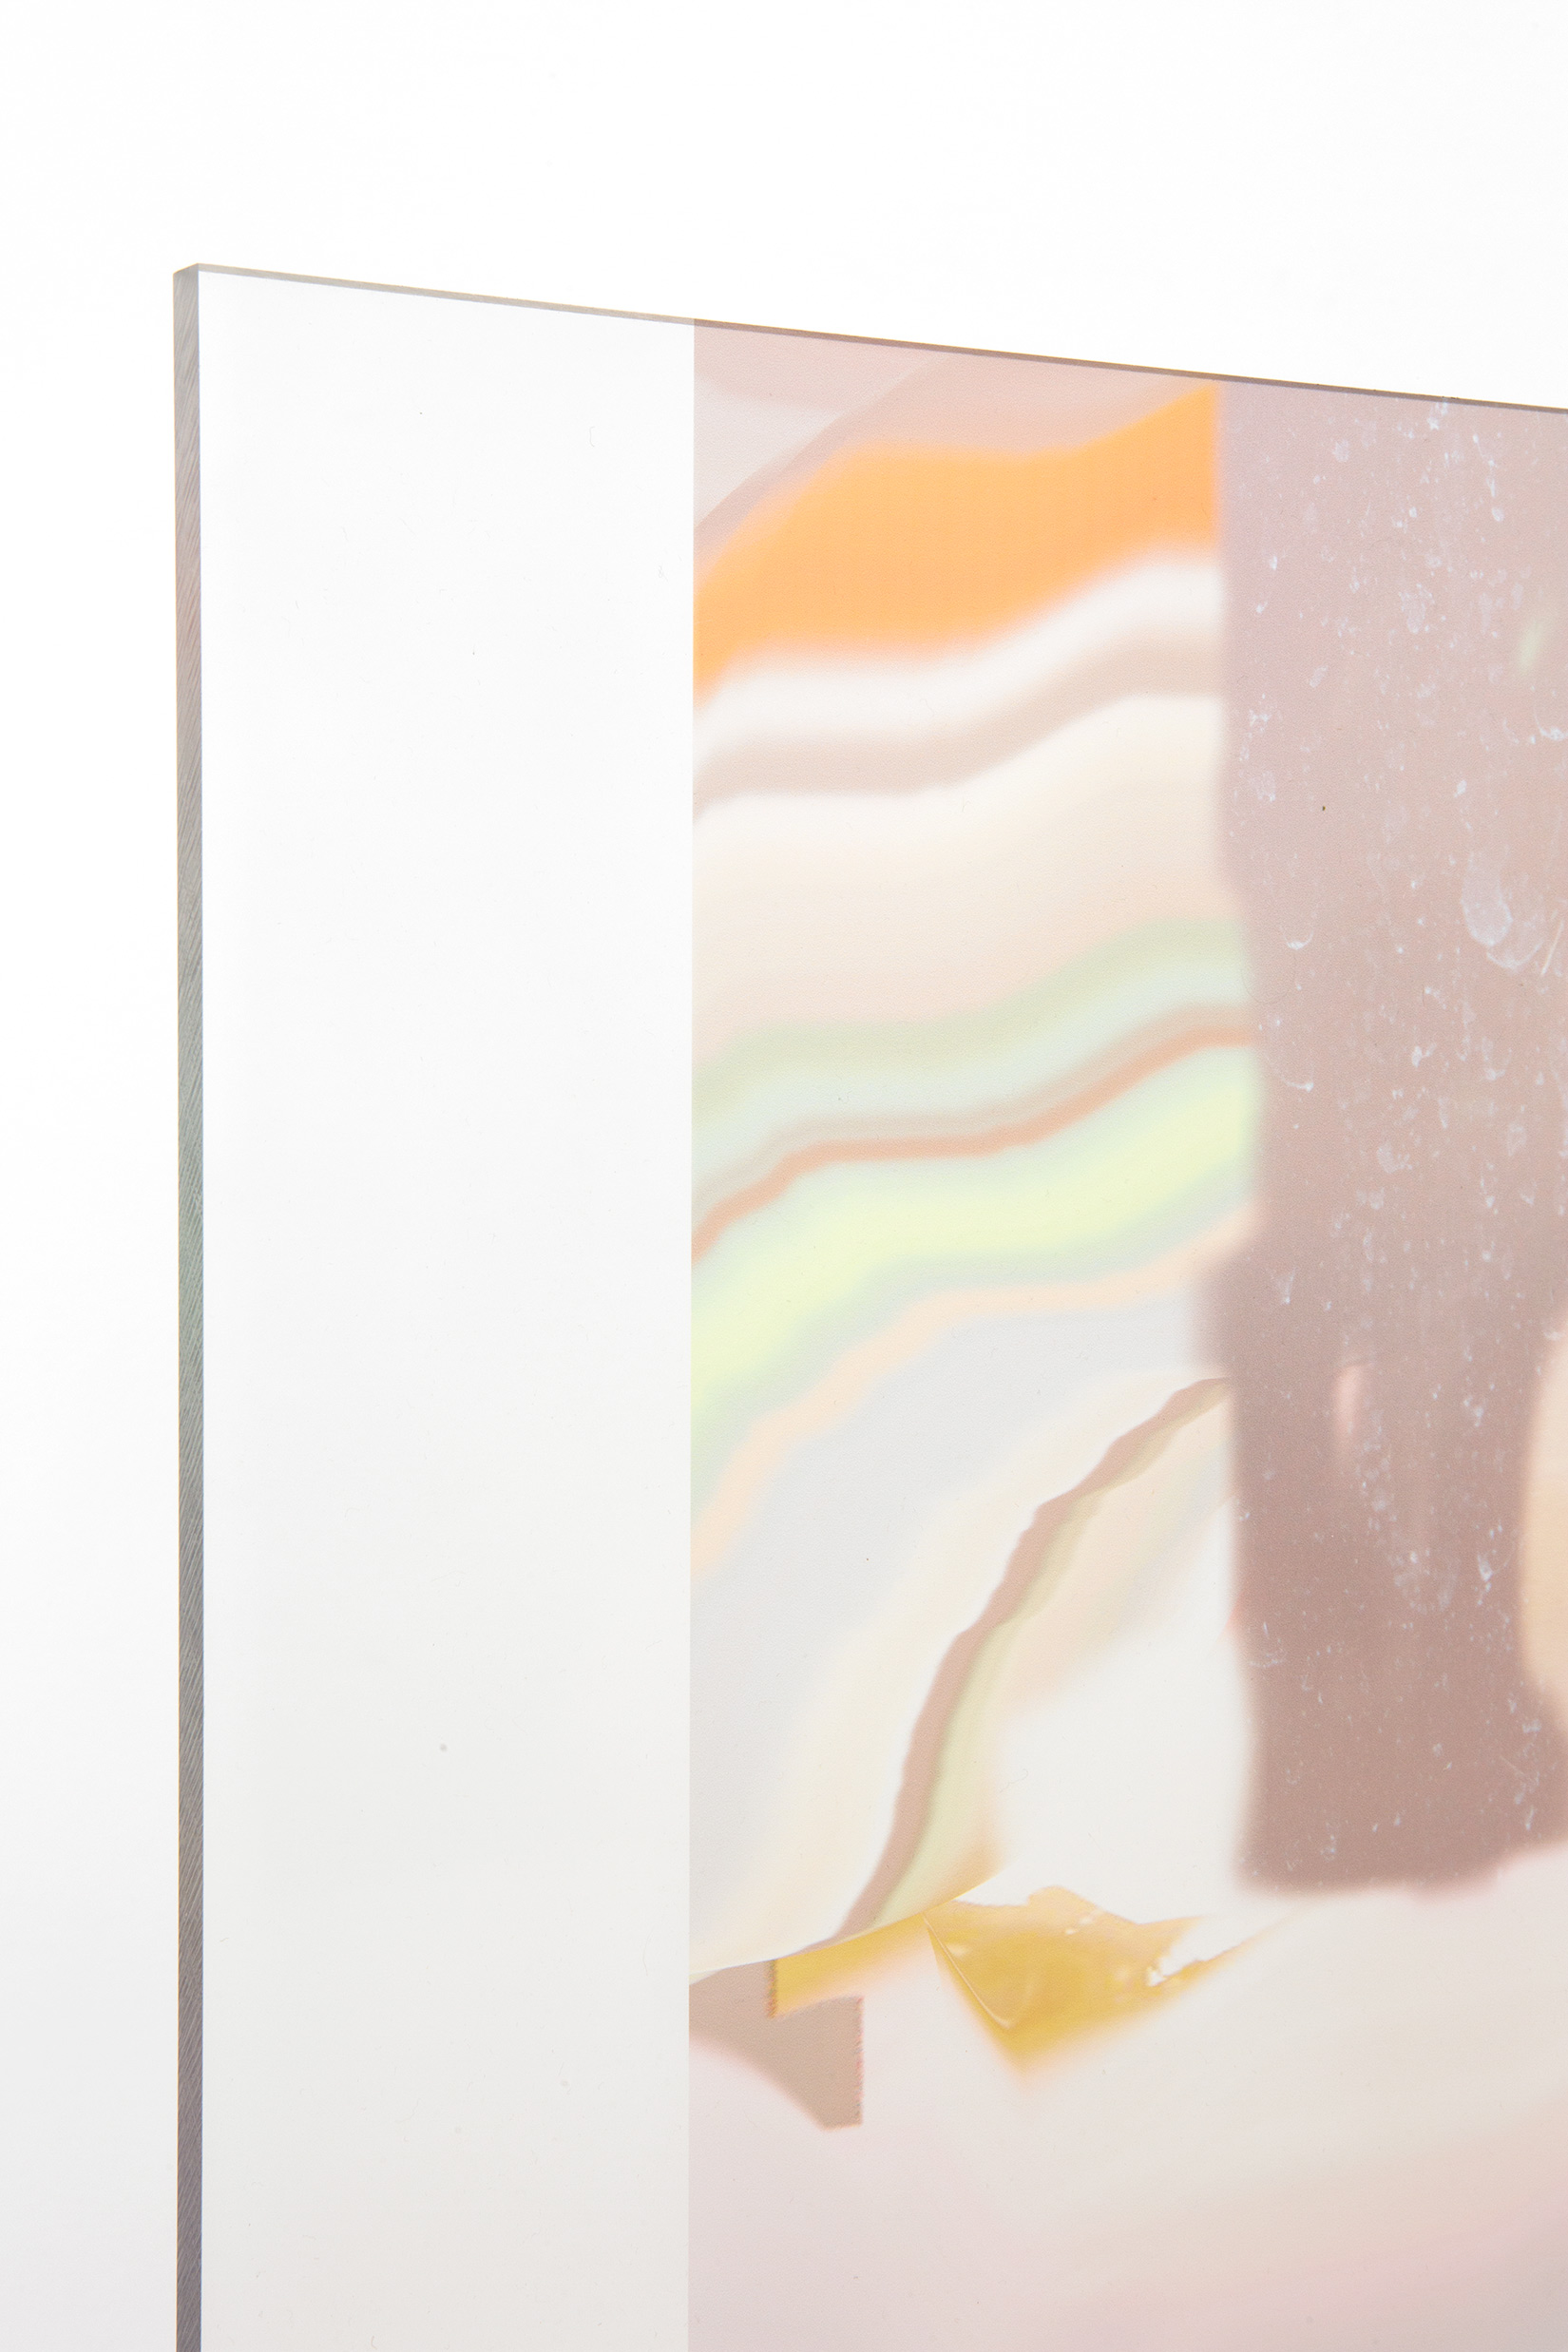 Marian Tubbs, “to banish air with air” (detail), 2014, Digital prints on SAV clear, acrylic, marble 1450 × 1390 × 645 mm